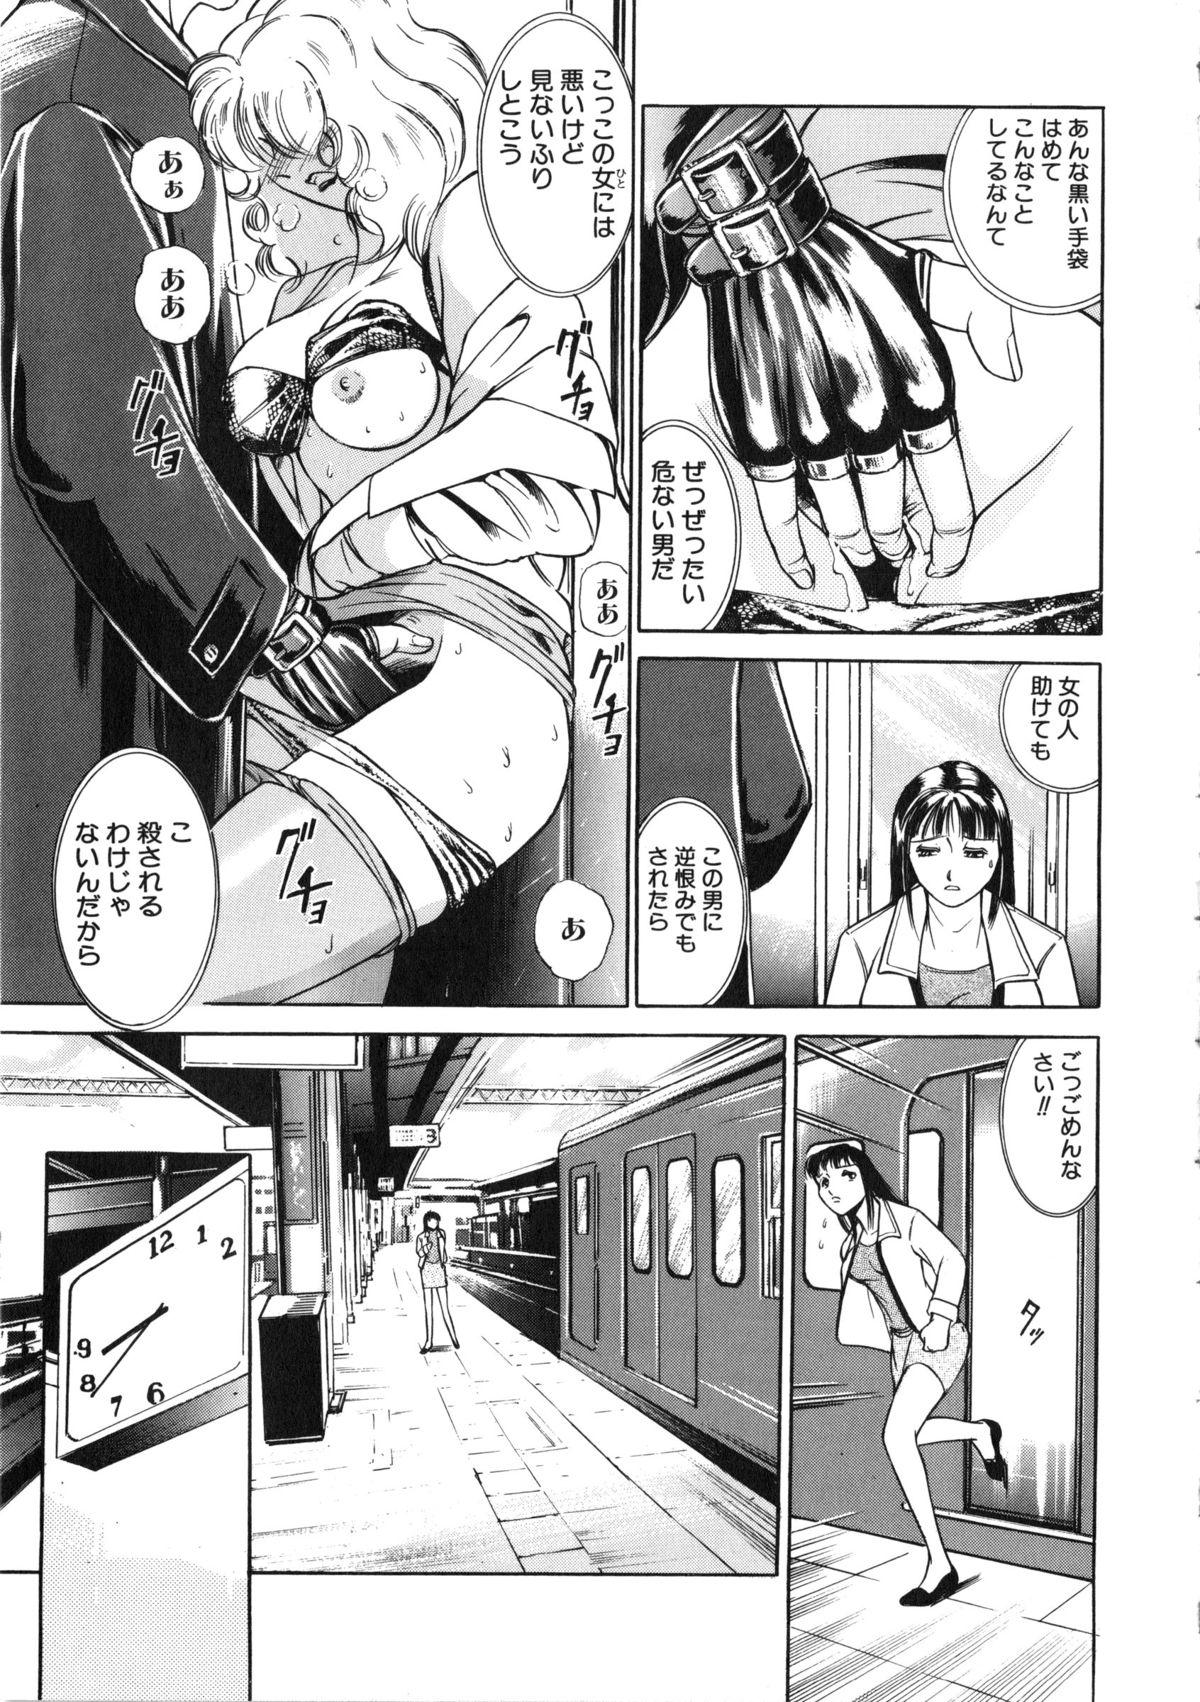 18 Year Old Sawaru Twerking - Page 8